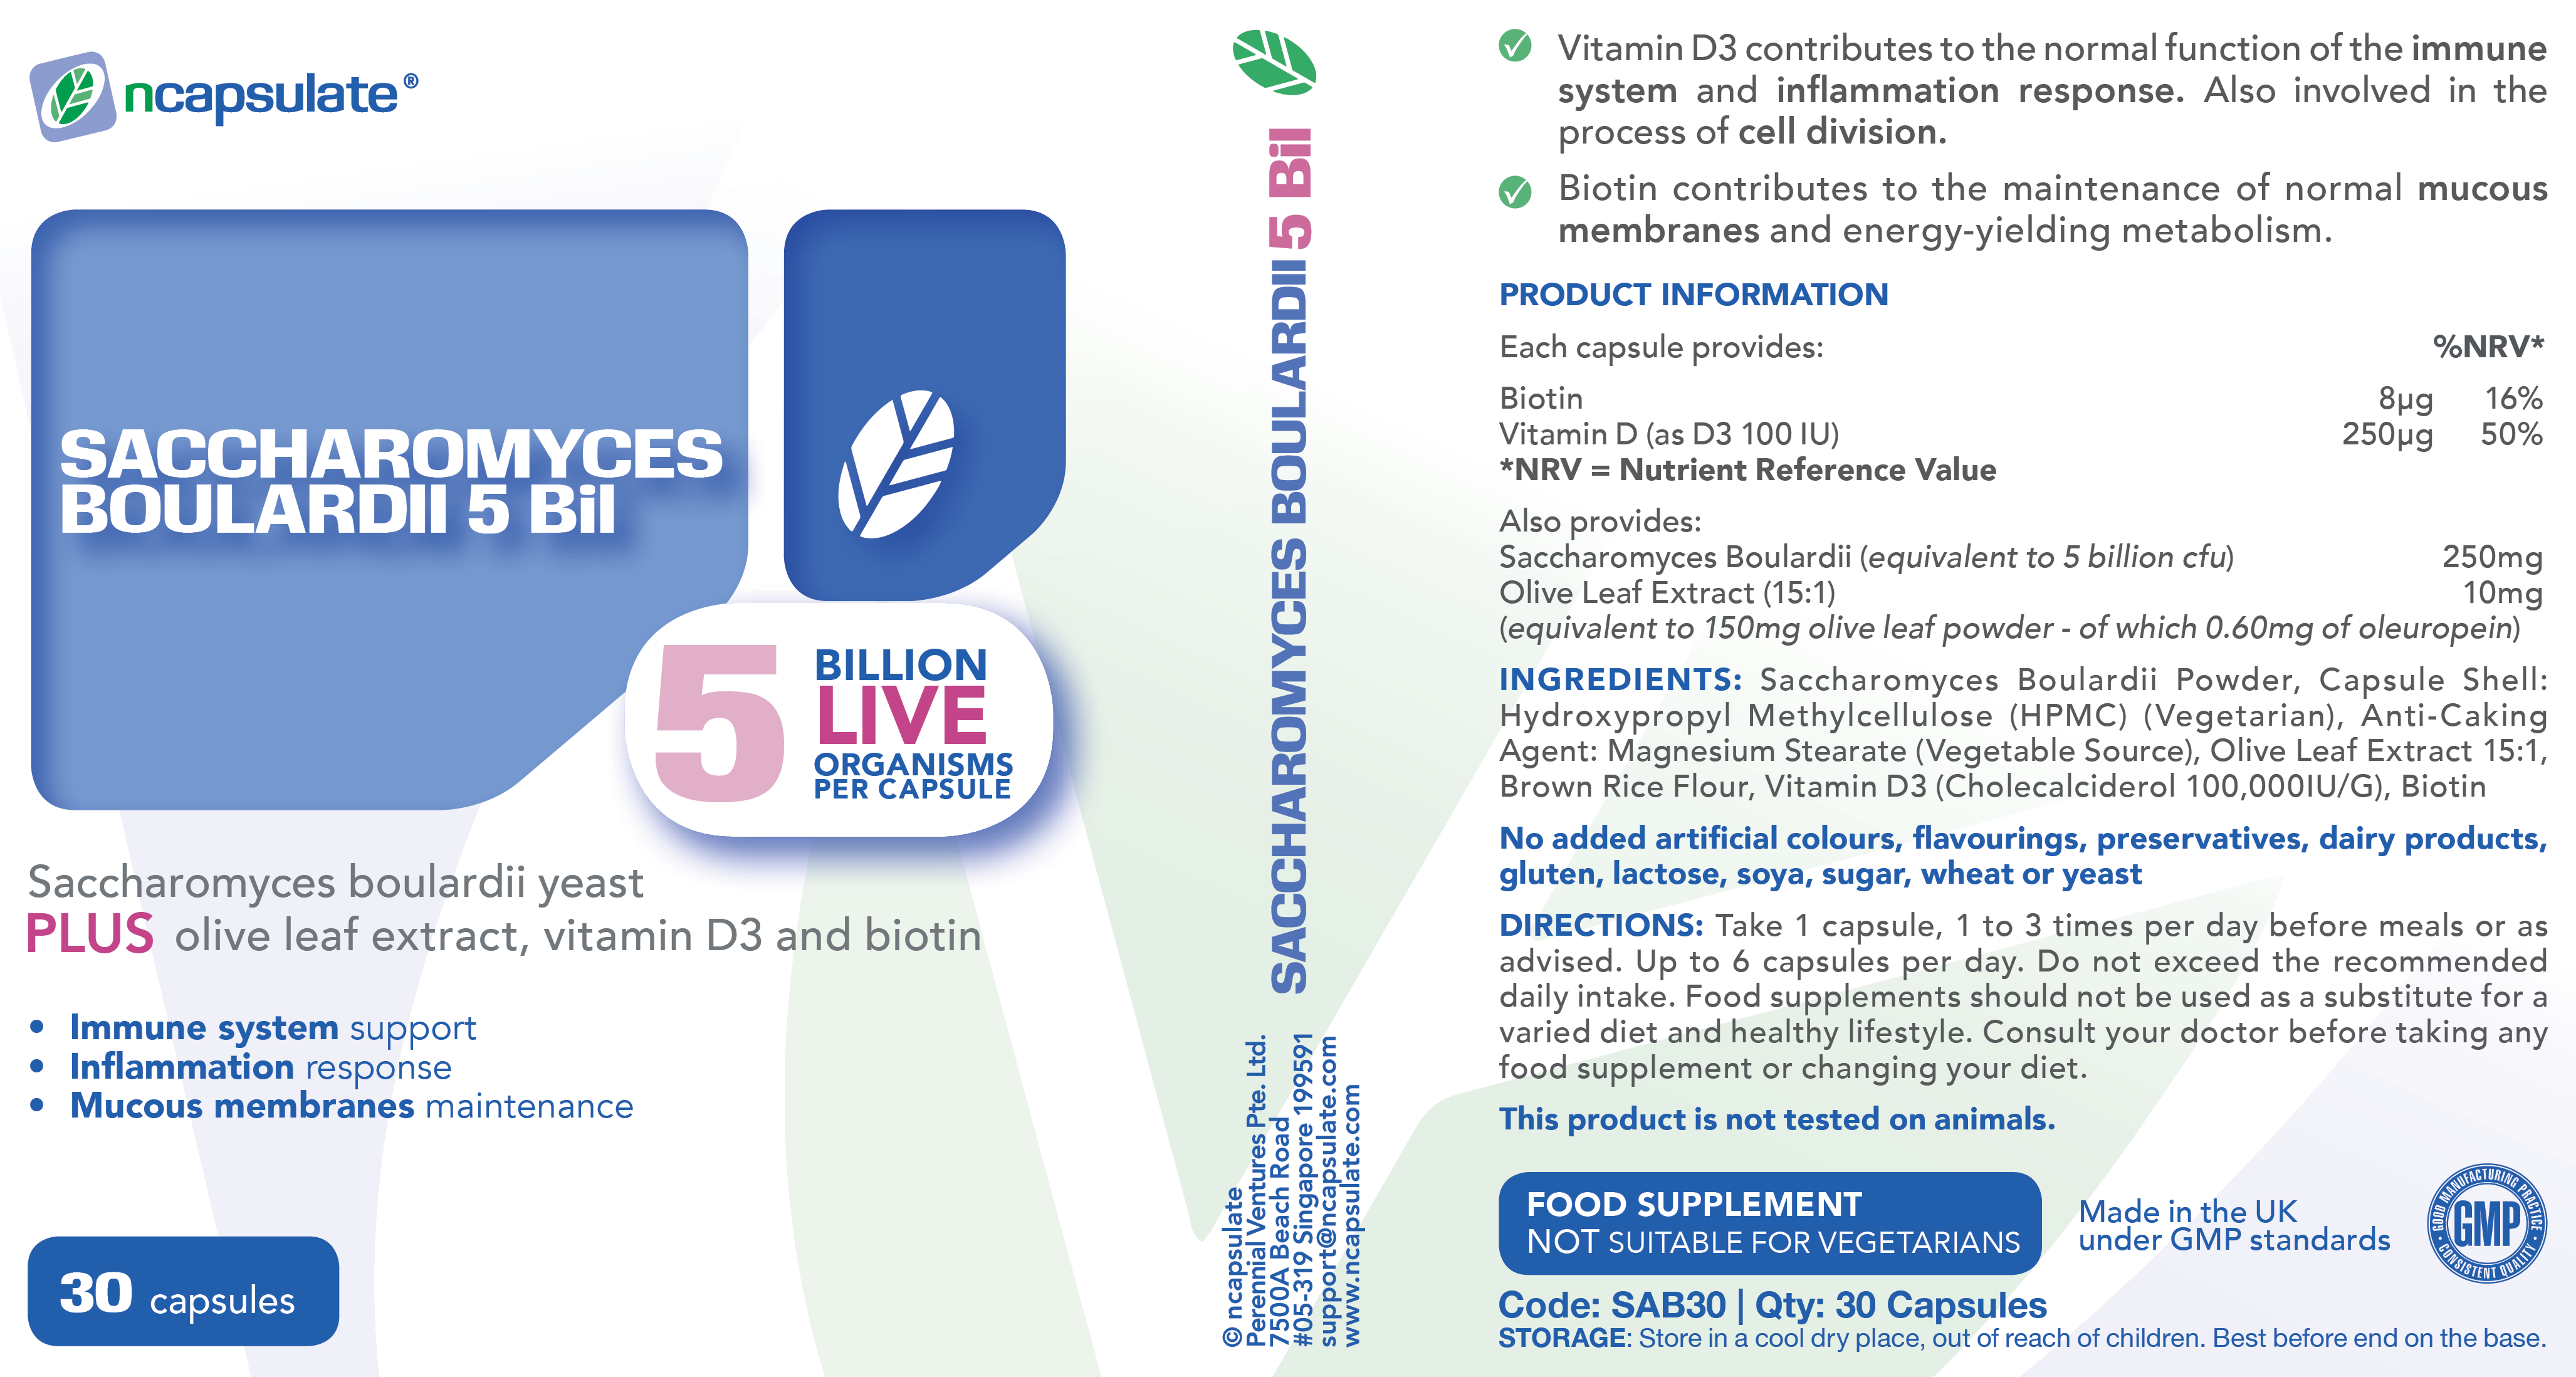 ncapsulate® SACCHAROMYCES BOULARDII 5 BIL Premium Health Supplement Product Label